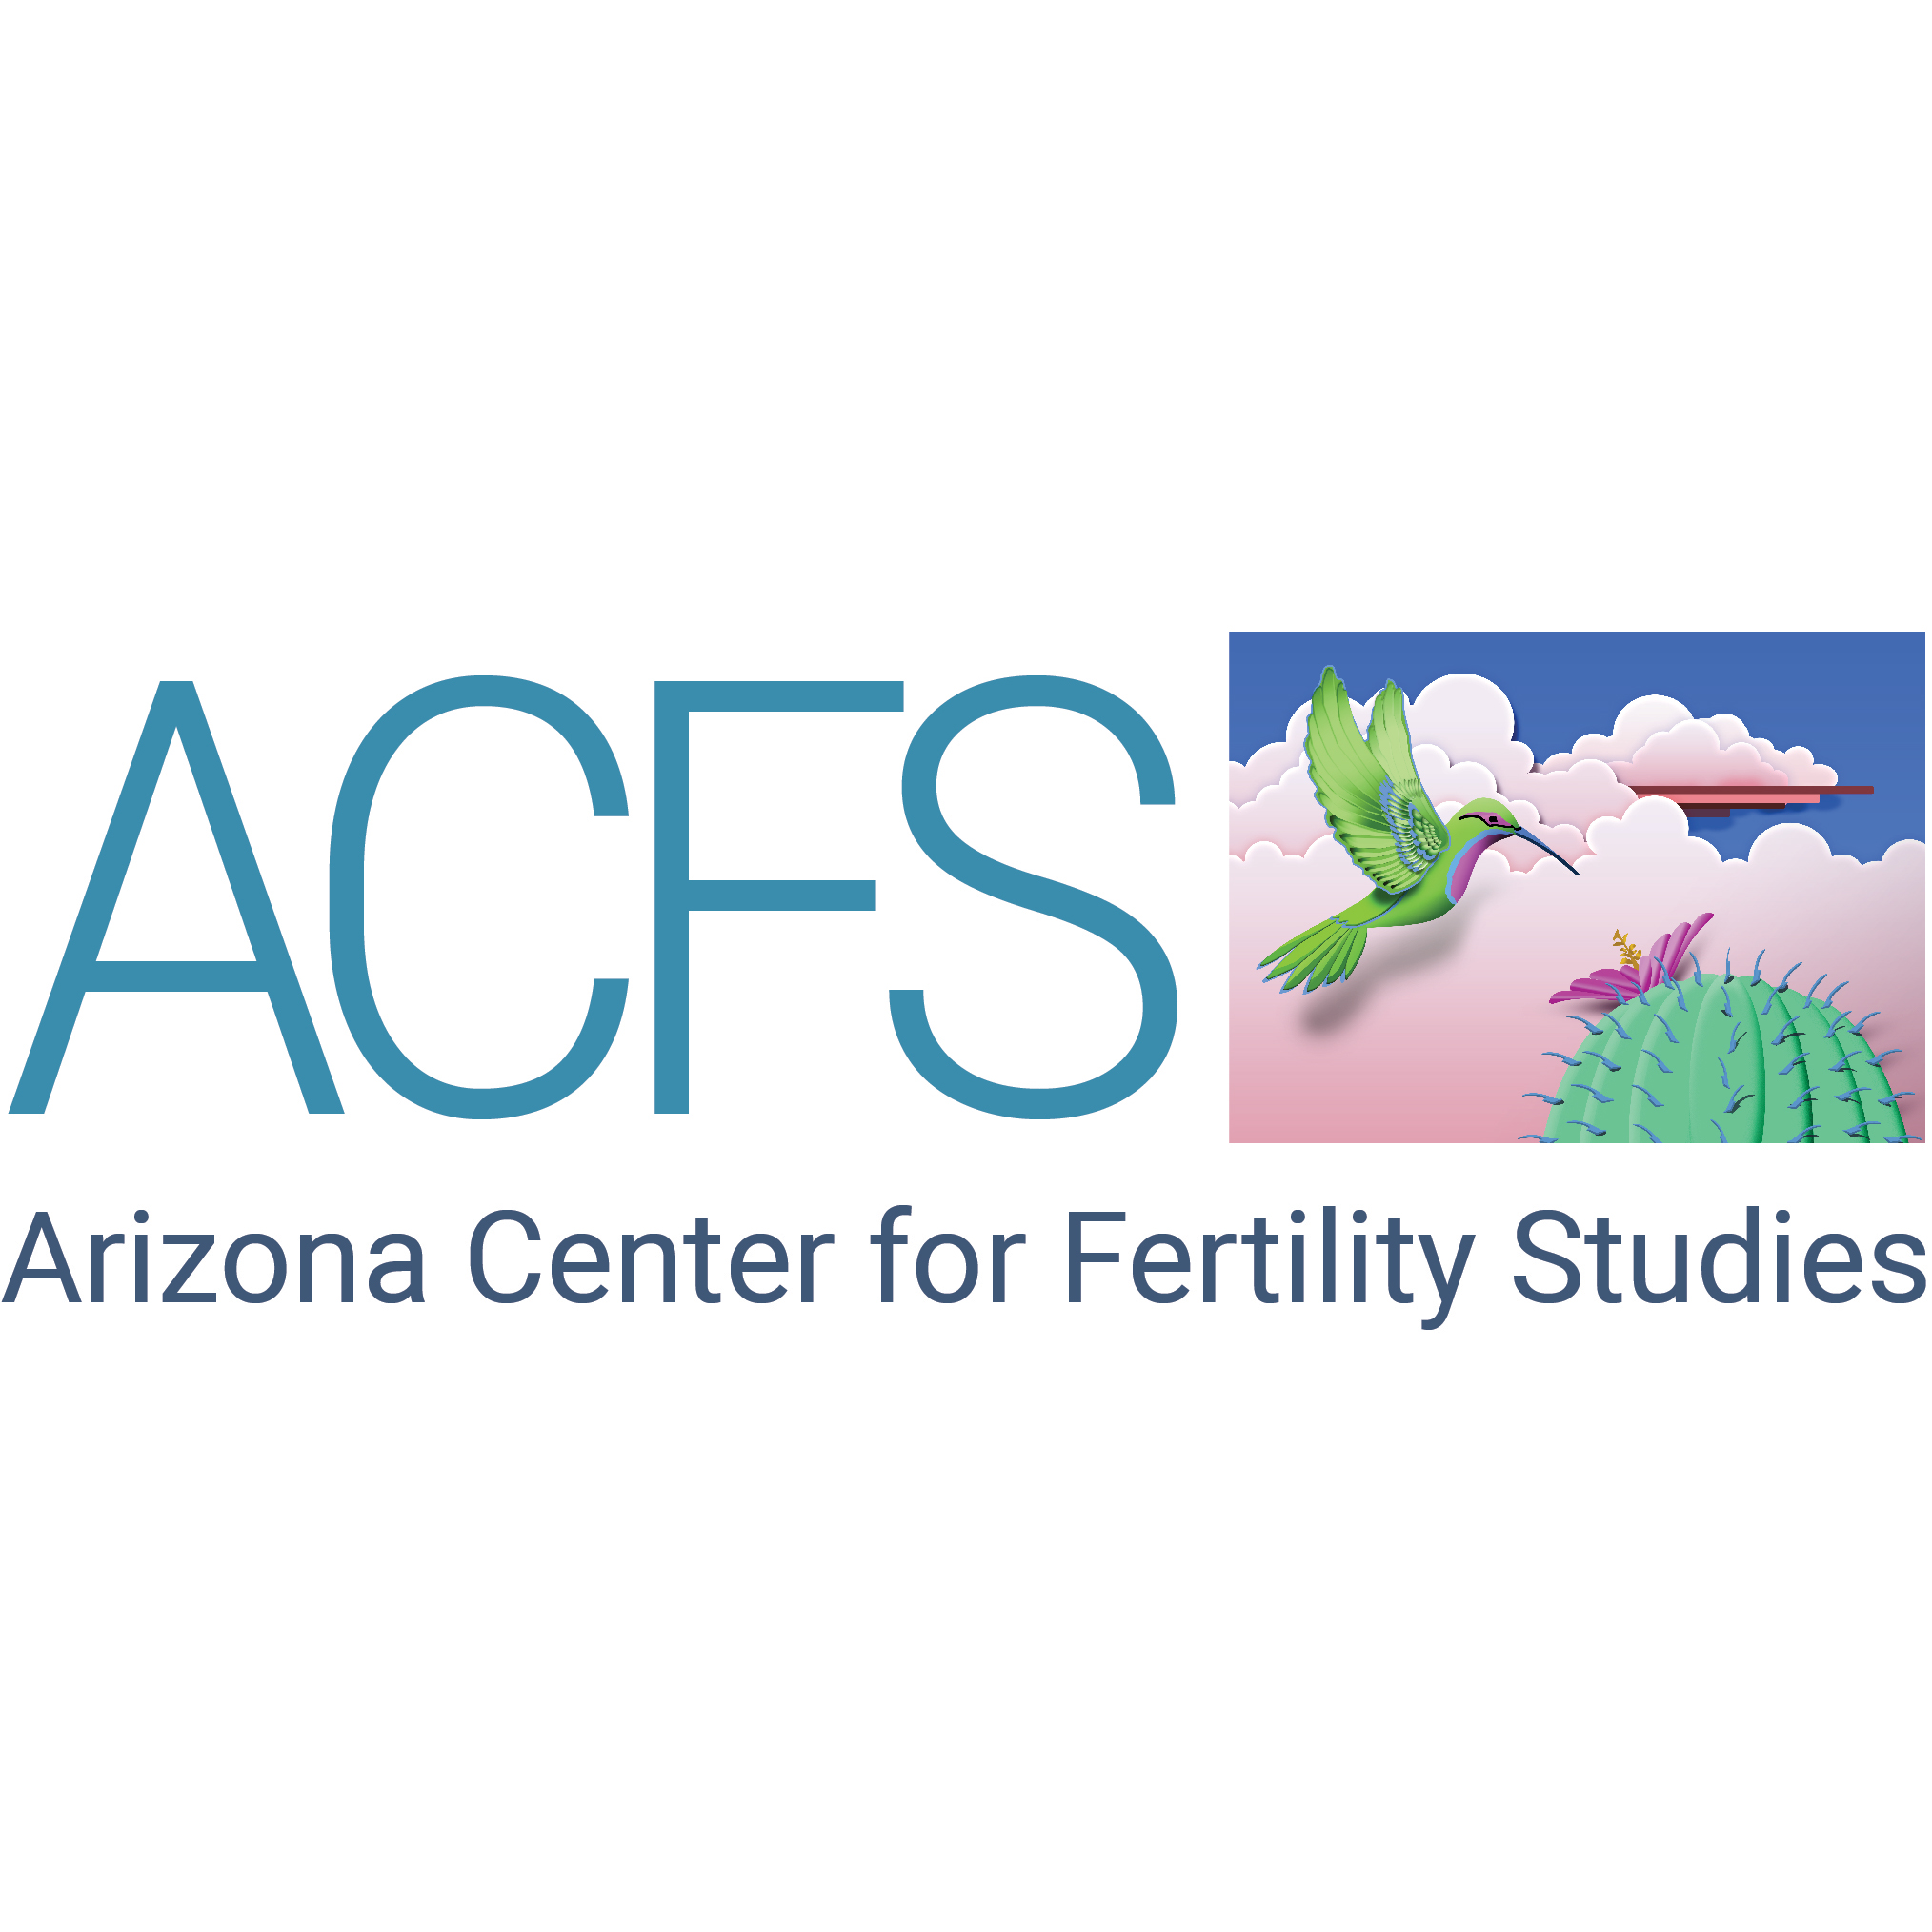 Arizona Center for Fertility Studies